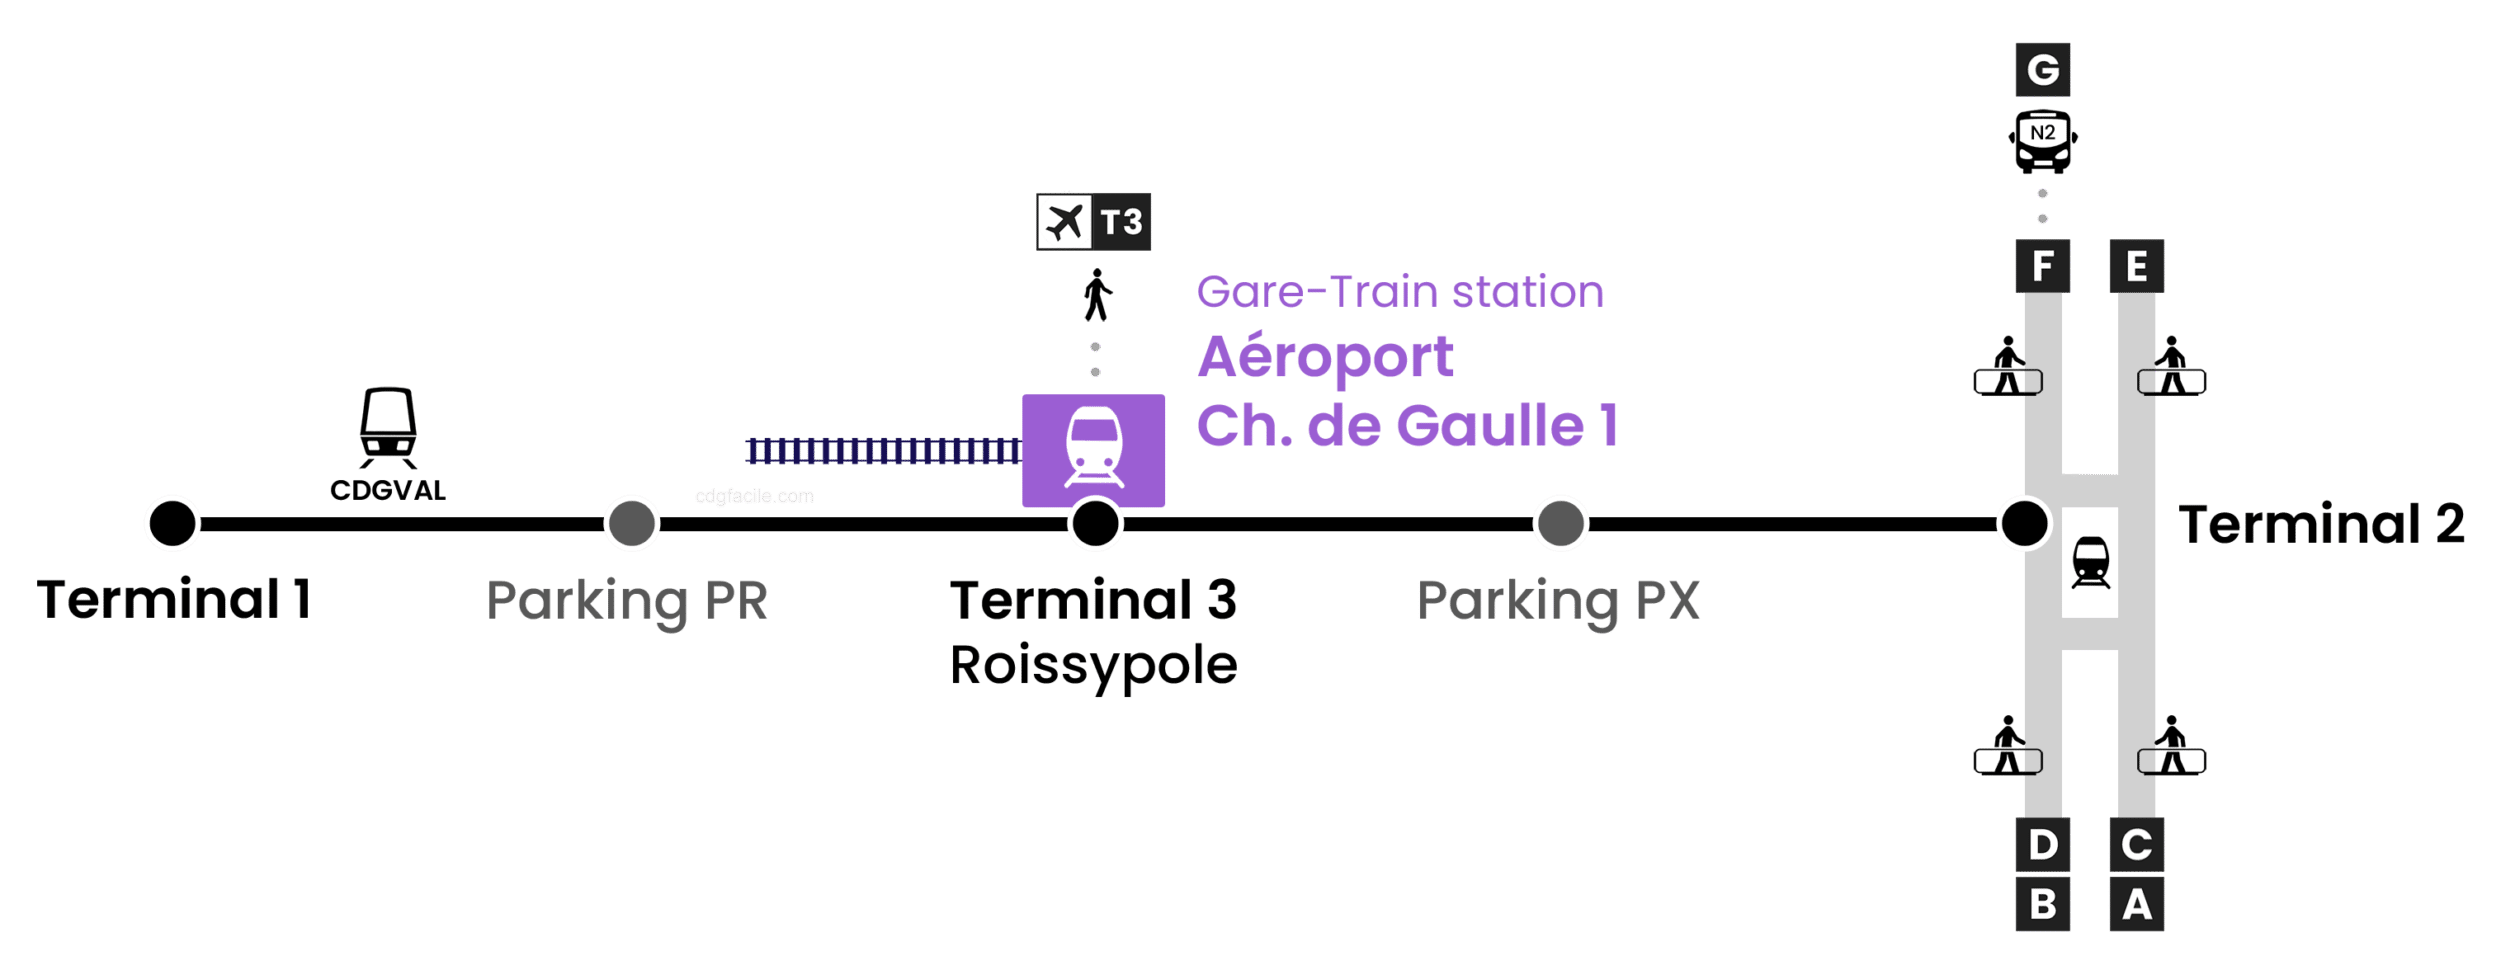 Travel between terminals - CHARLES DE GAULLE AIRPORT (Paris CDG)